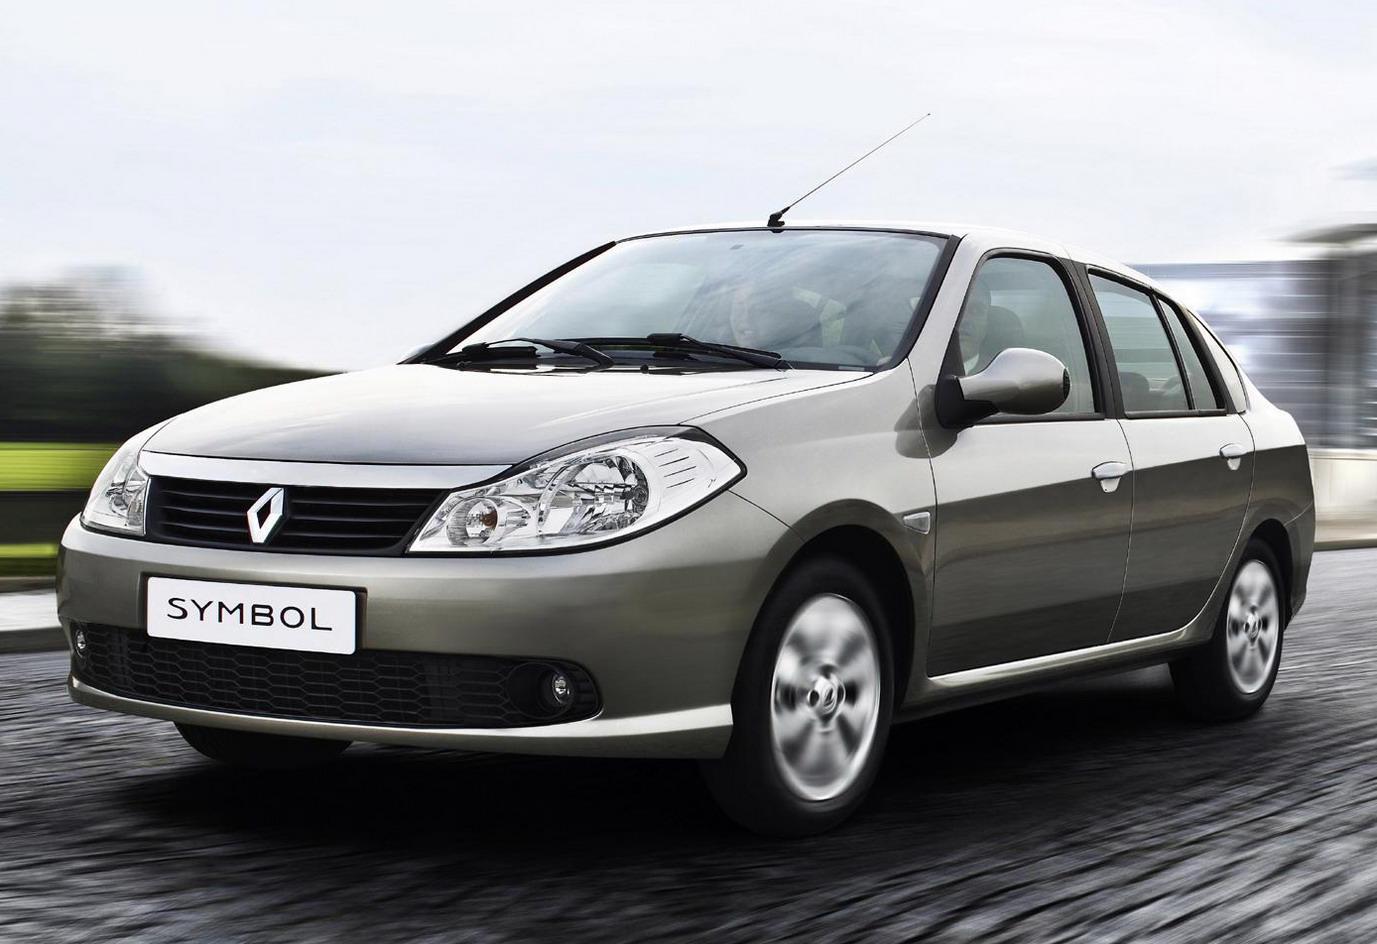   Renault Symbol-(Thalia)